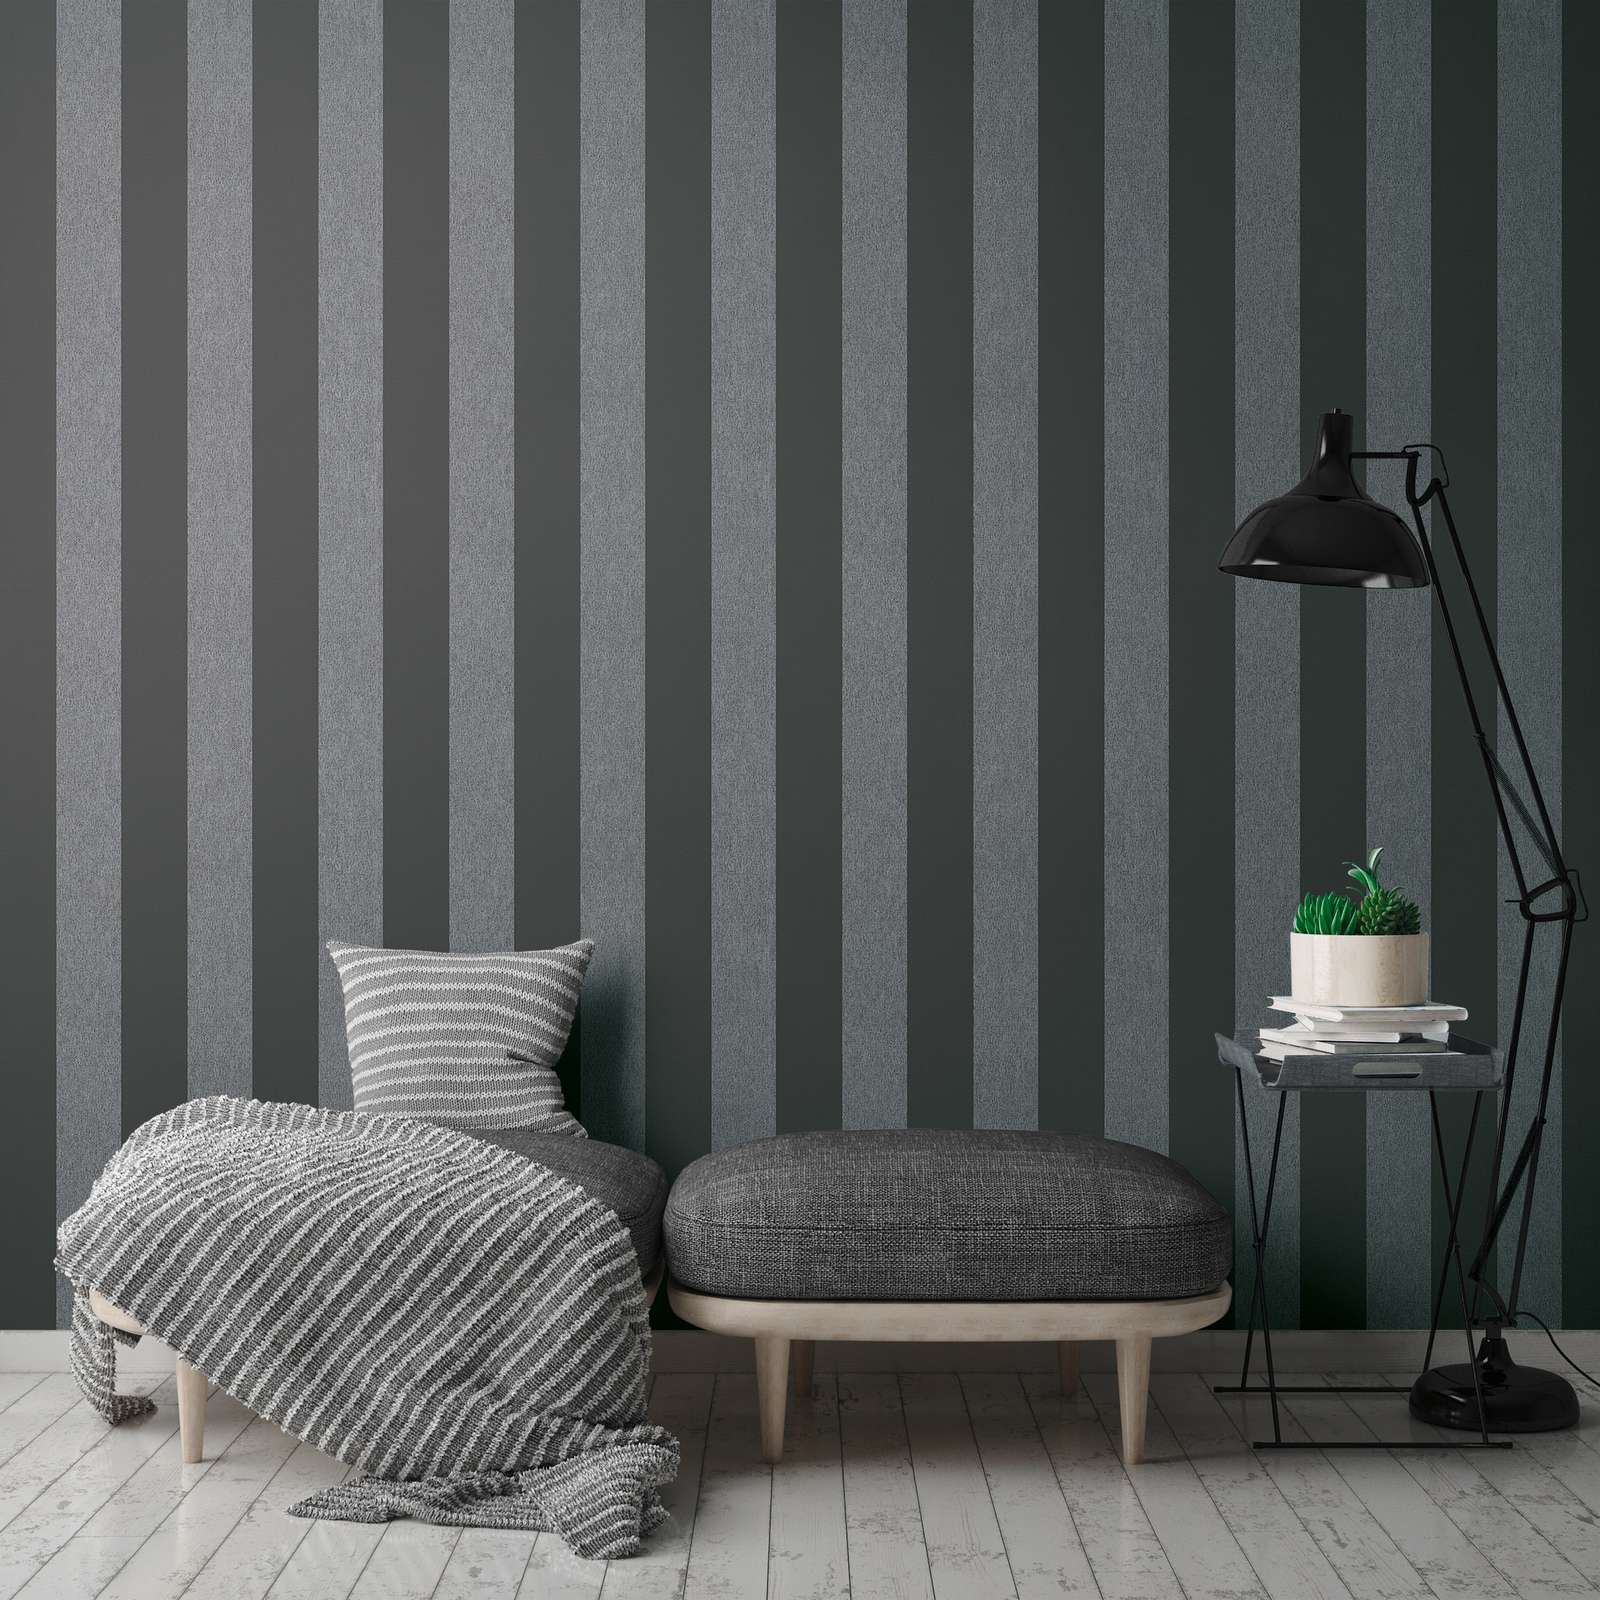             Stripes non-woven wallpaper in matt textured look - black, grey
        